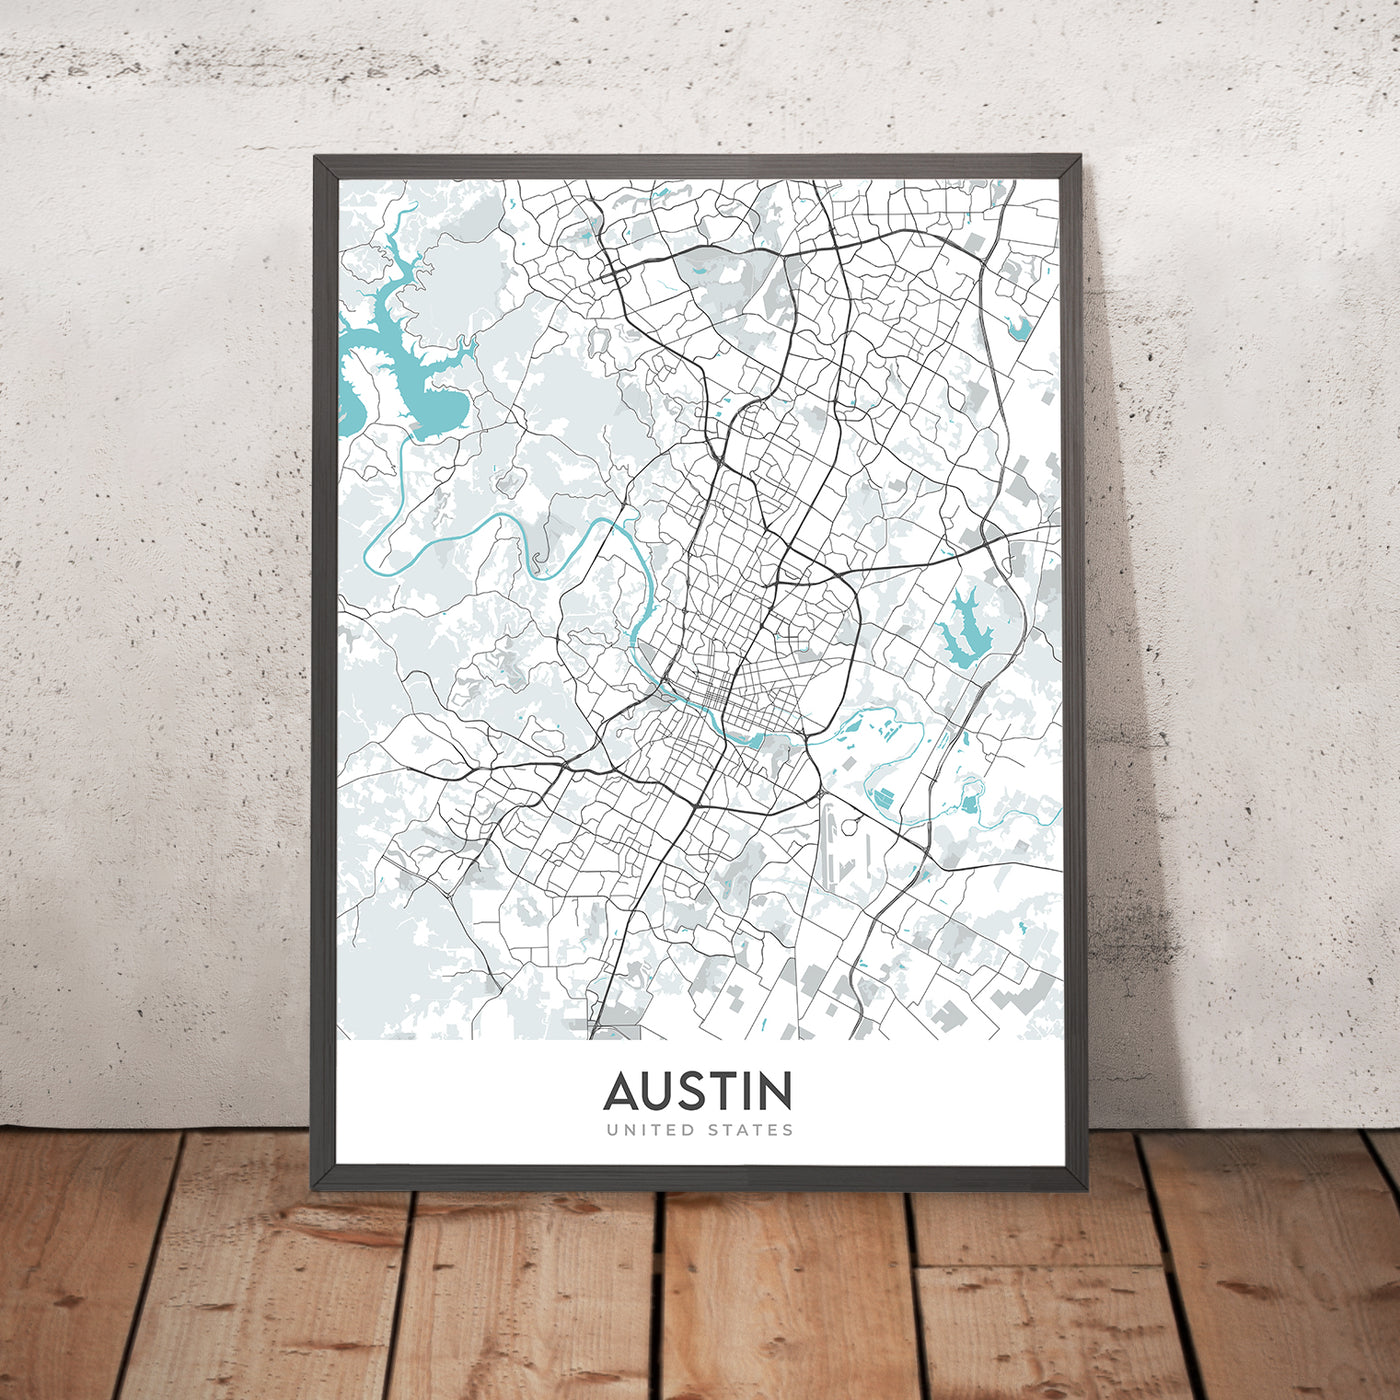 Modern City Map of Austin, TX: Downtown, University of Texas, Zilker Park, I-35, US-183